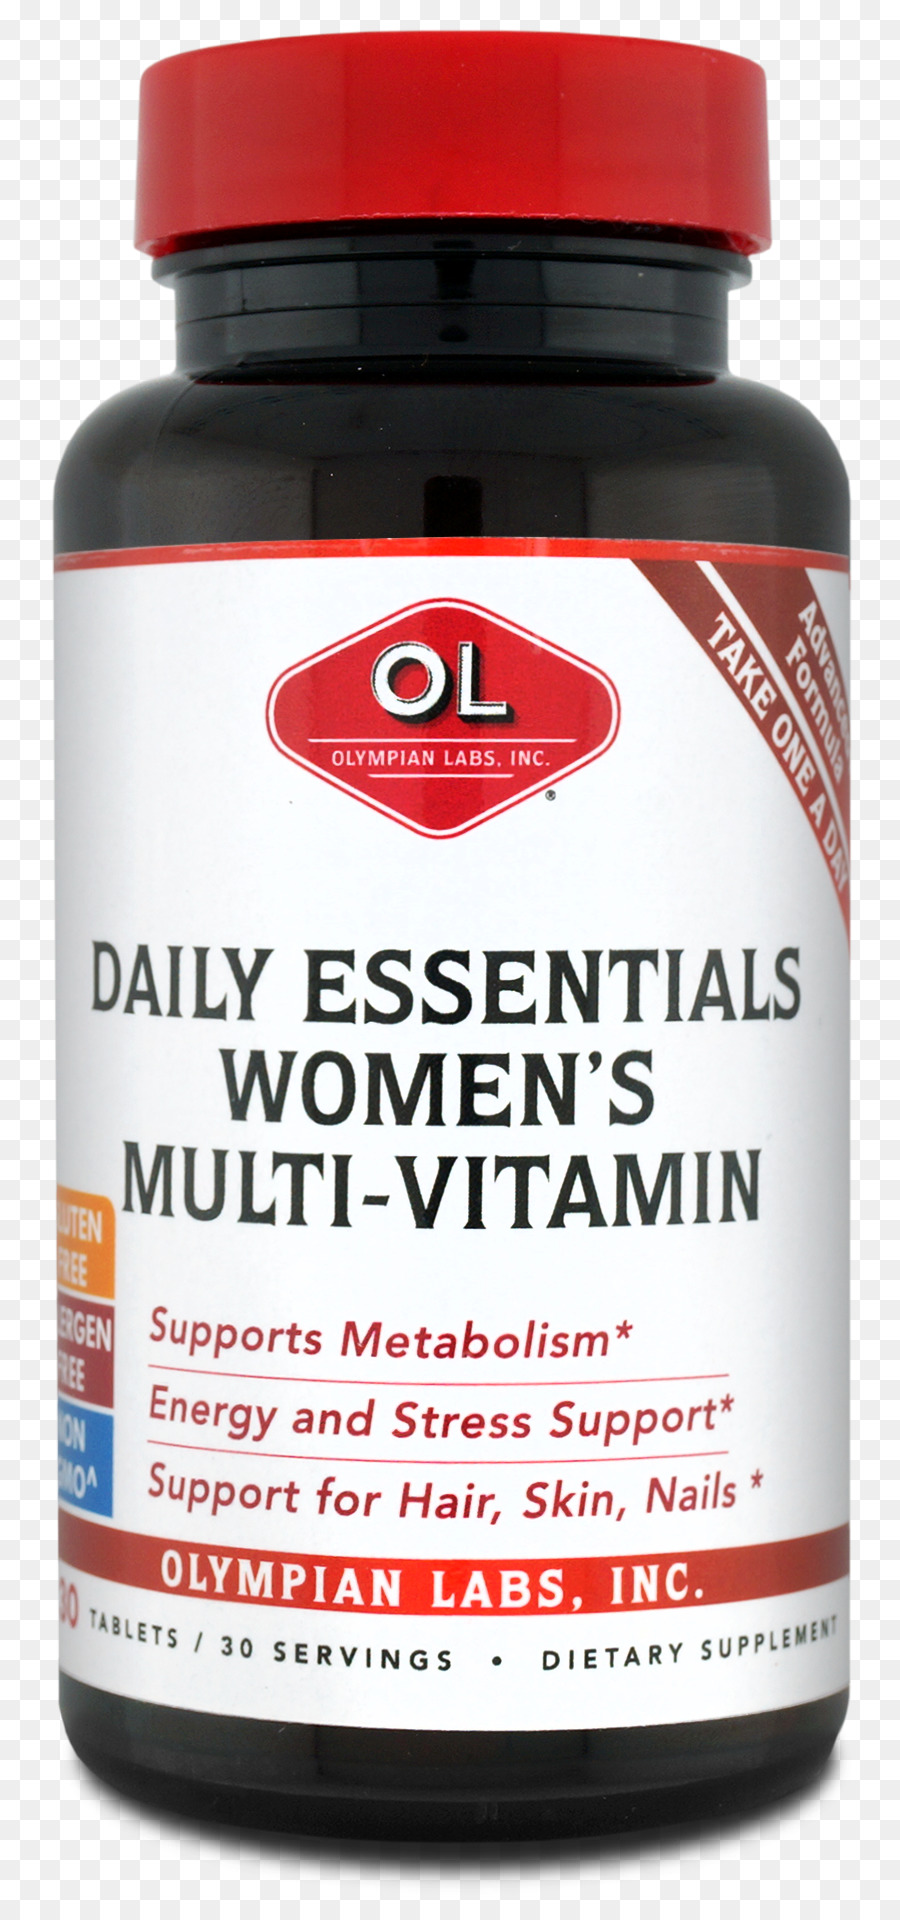 Nahrungsergänzungsmittel Olympian Labs Inc. Tägliche Essentials Women ' s Multi Vitamin Geschmack, der von Bob Holmes, Jonathan Yen (Erzähler) (9781515966647) Produkt Olympian Labs, Inc. - Nagel Wachstum Formel